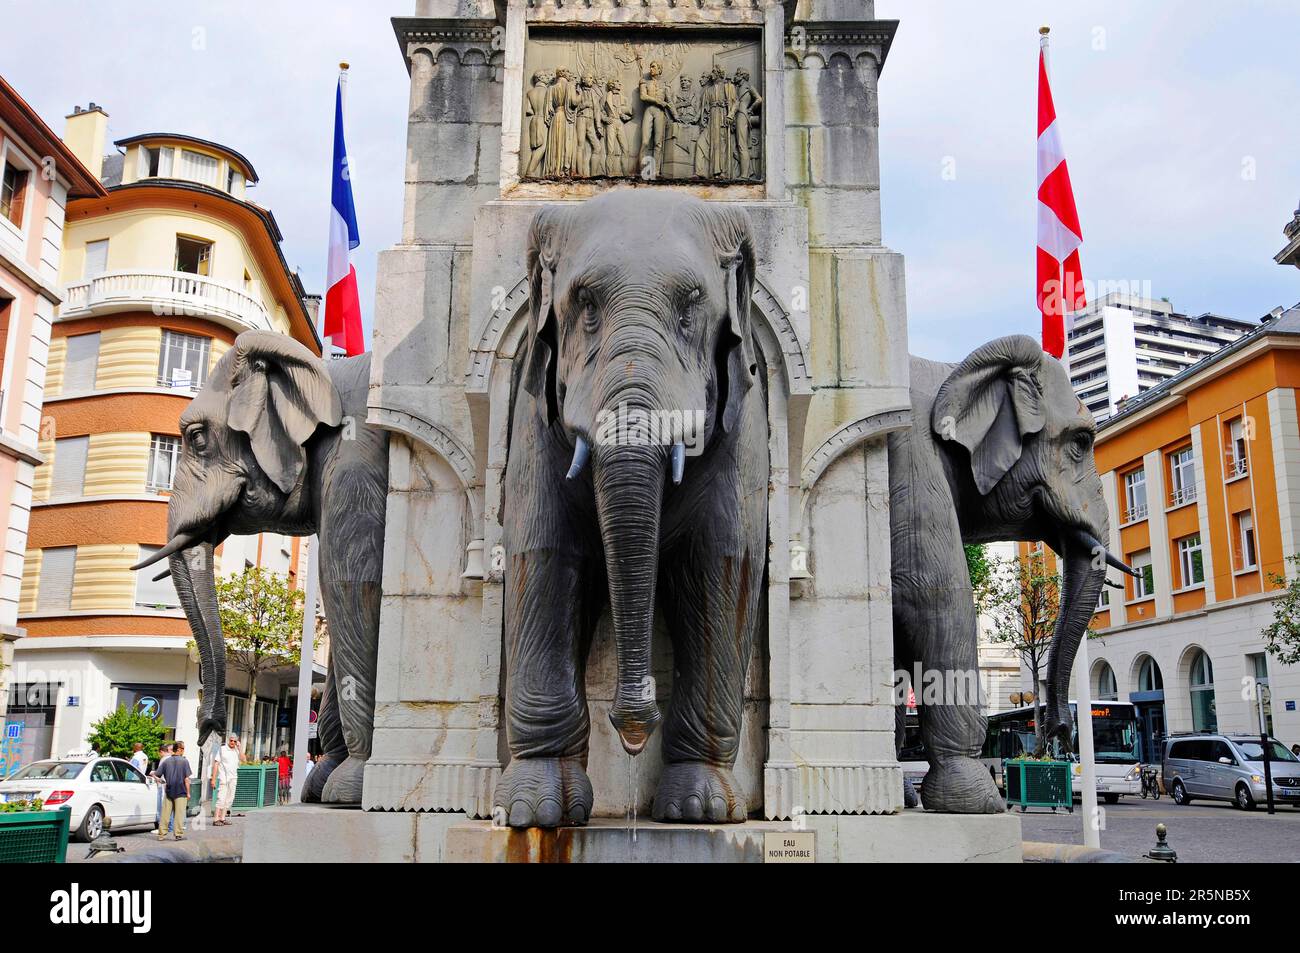 Fontaine des éléphants, Fontaine des éléphants, Chambéry, Rhône-Alpes, France Banque D'Images